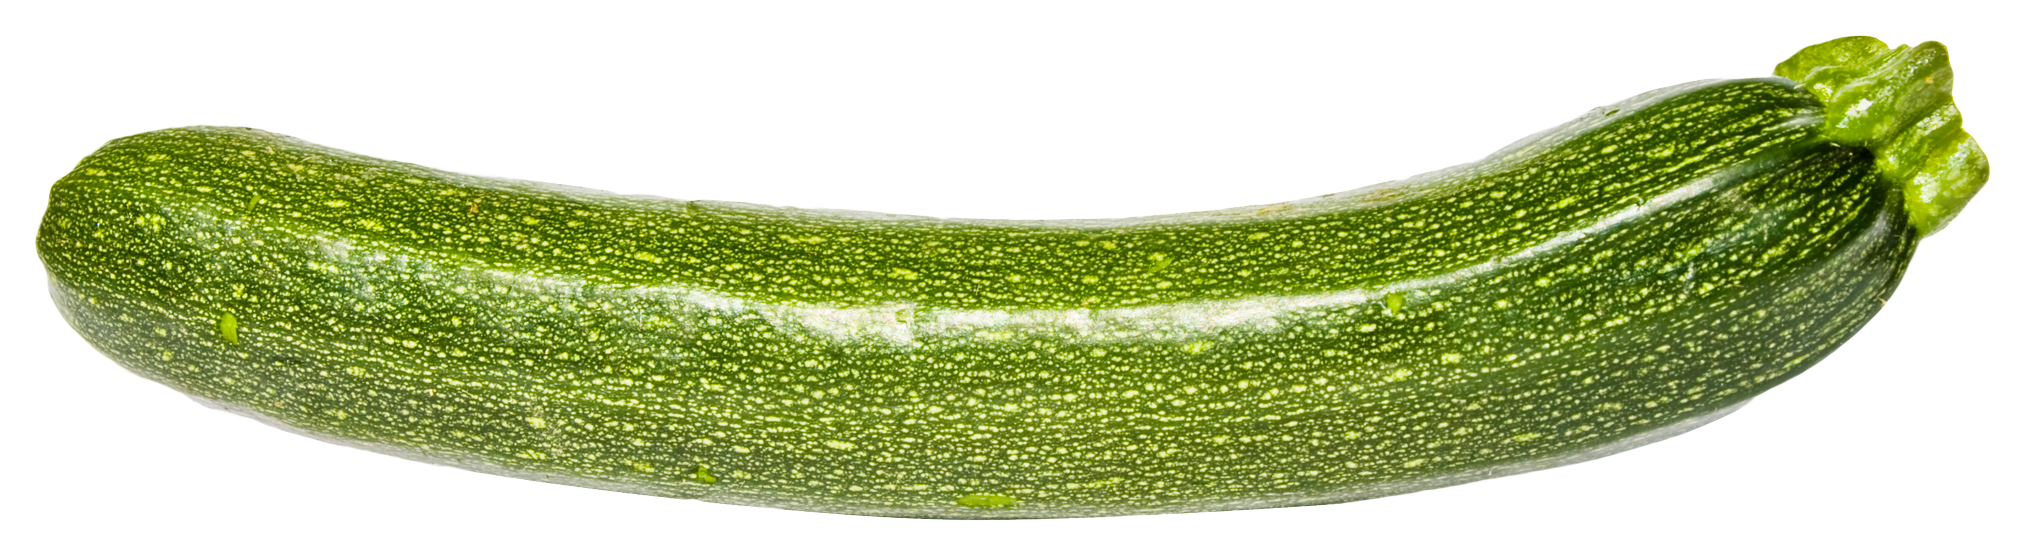 Png image pngpix . Zucchini clipart zucchini plant